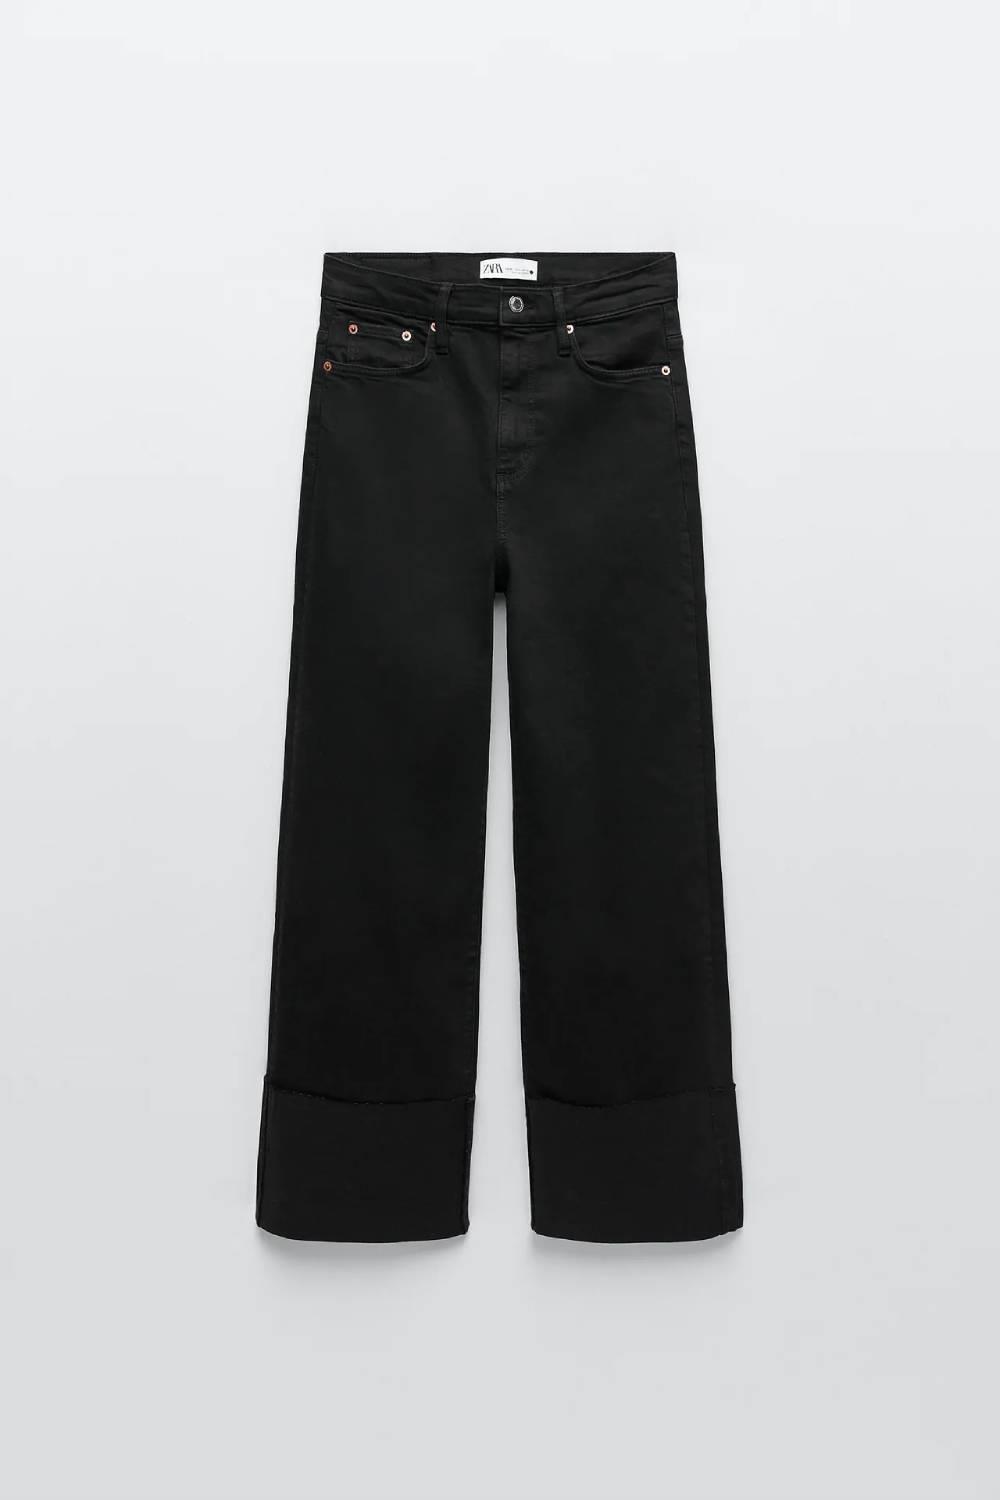 Jeans 'folded up' en color negro, Zara